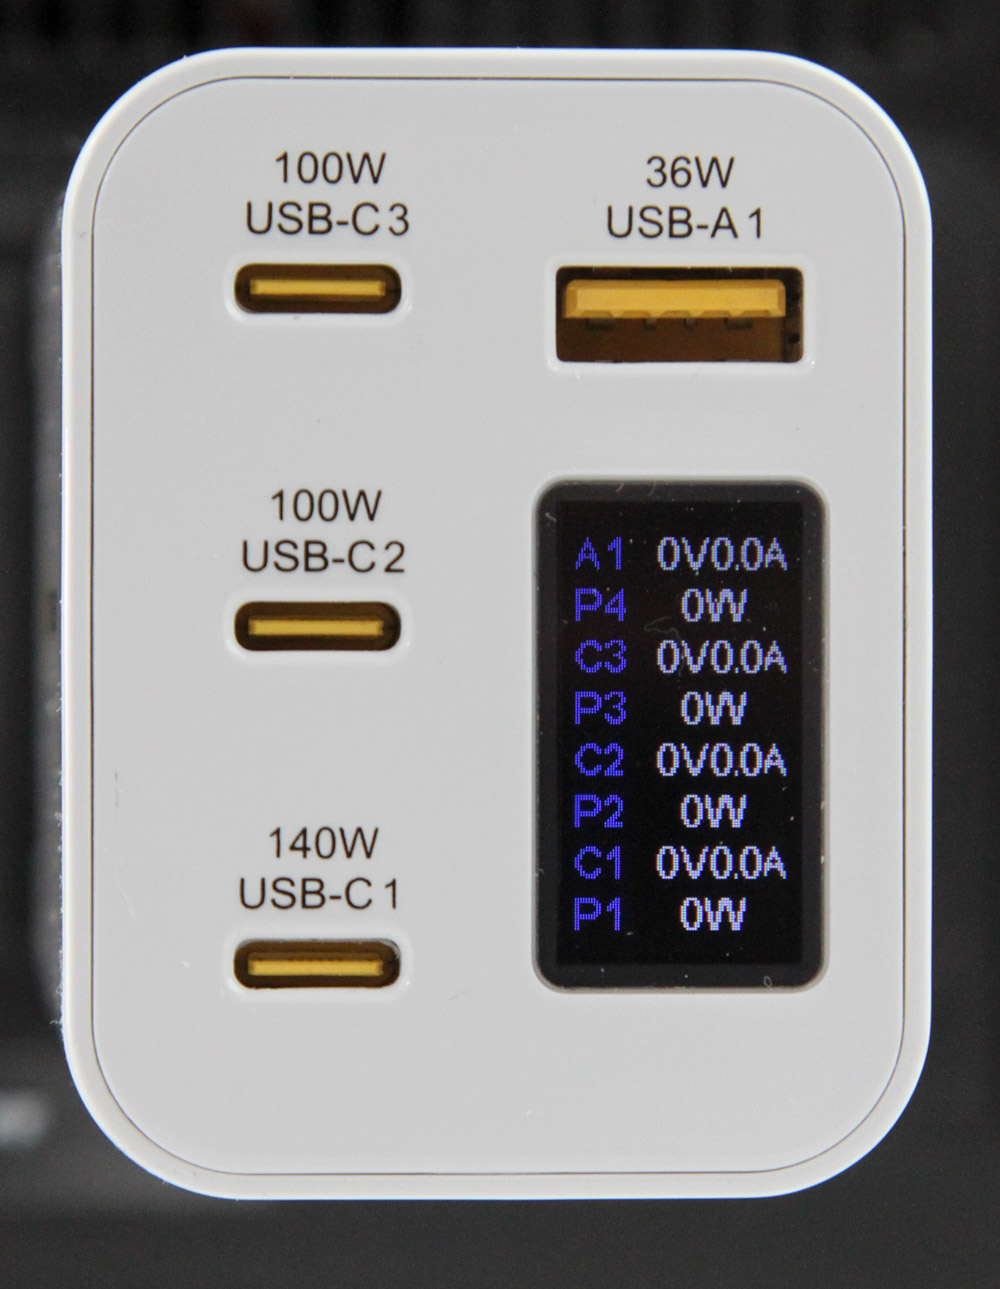 280W Zeus USB-C GaN Charger – Chargeasap